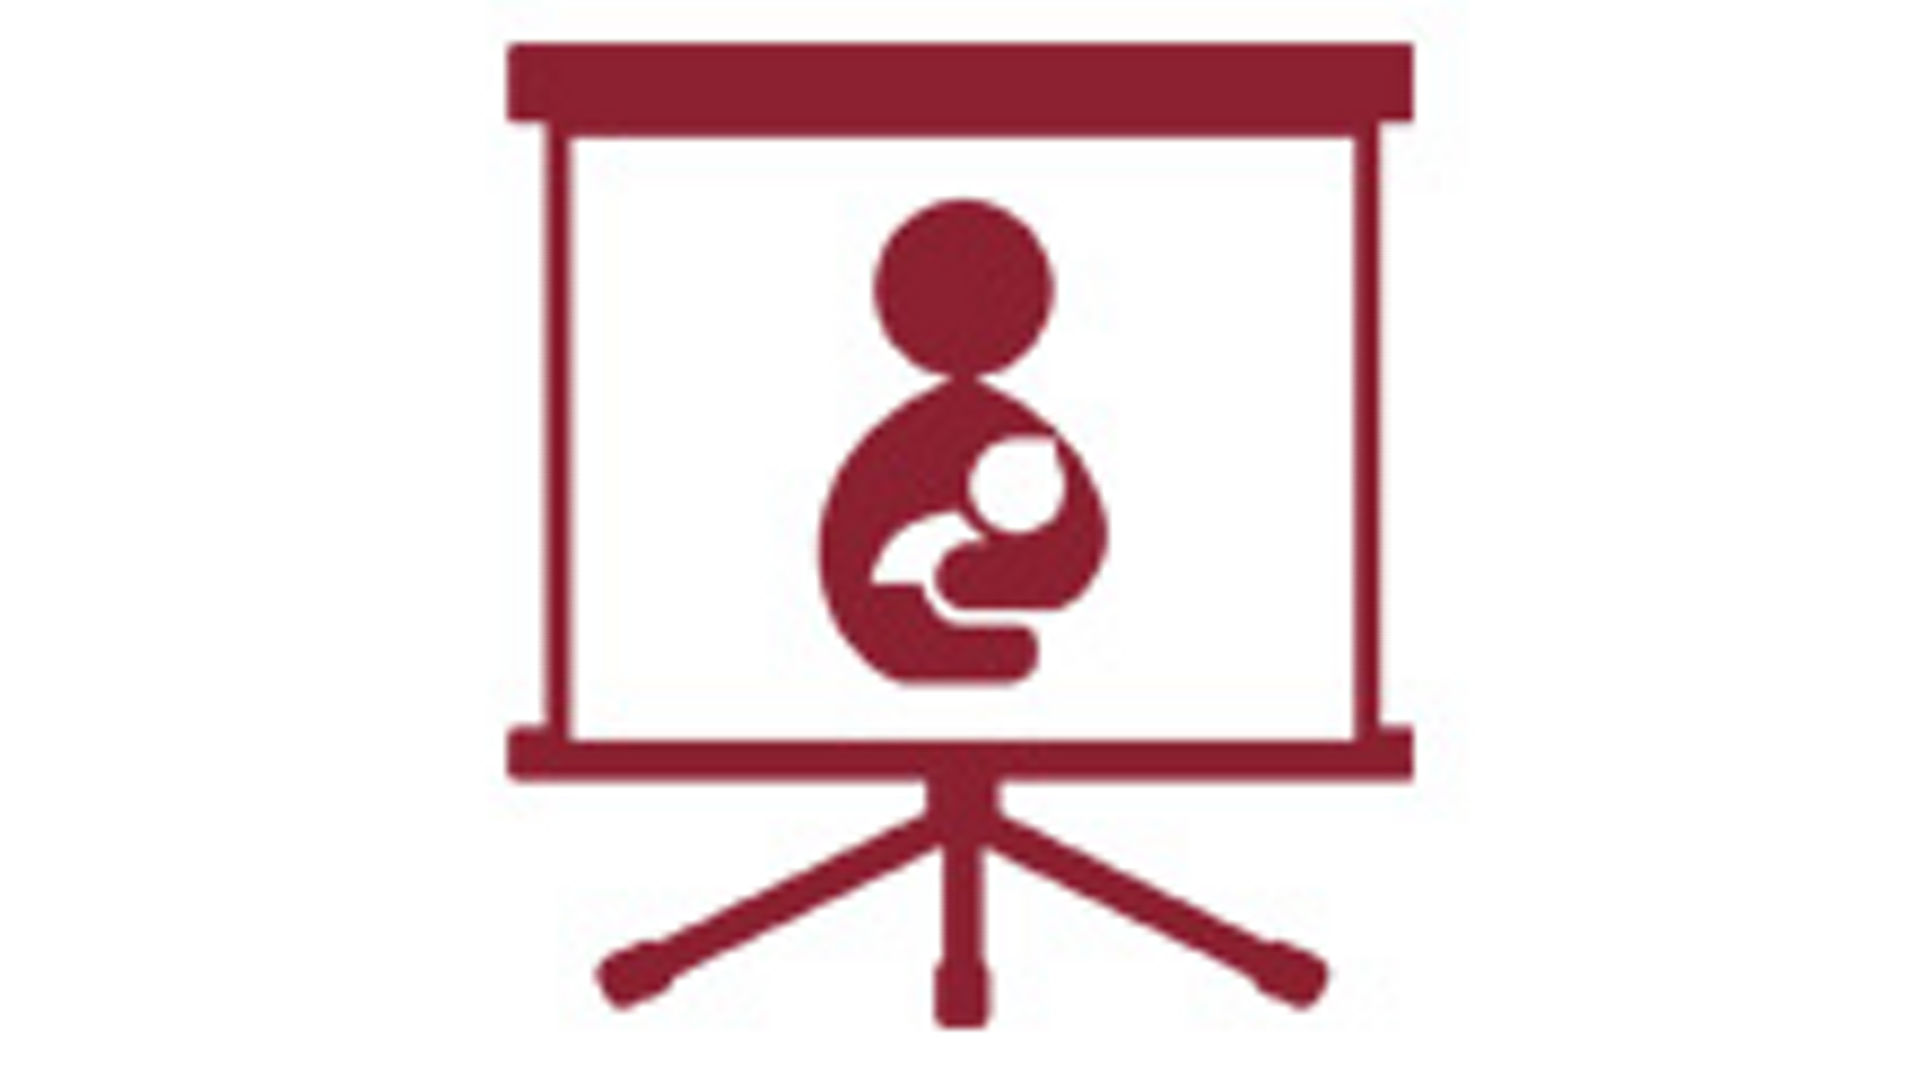 Whiteboard with fertility logo